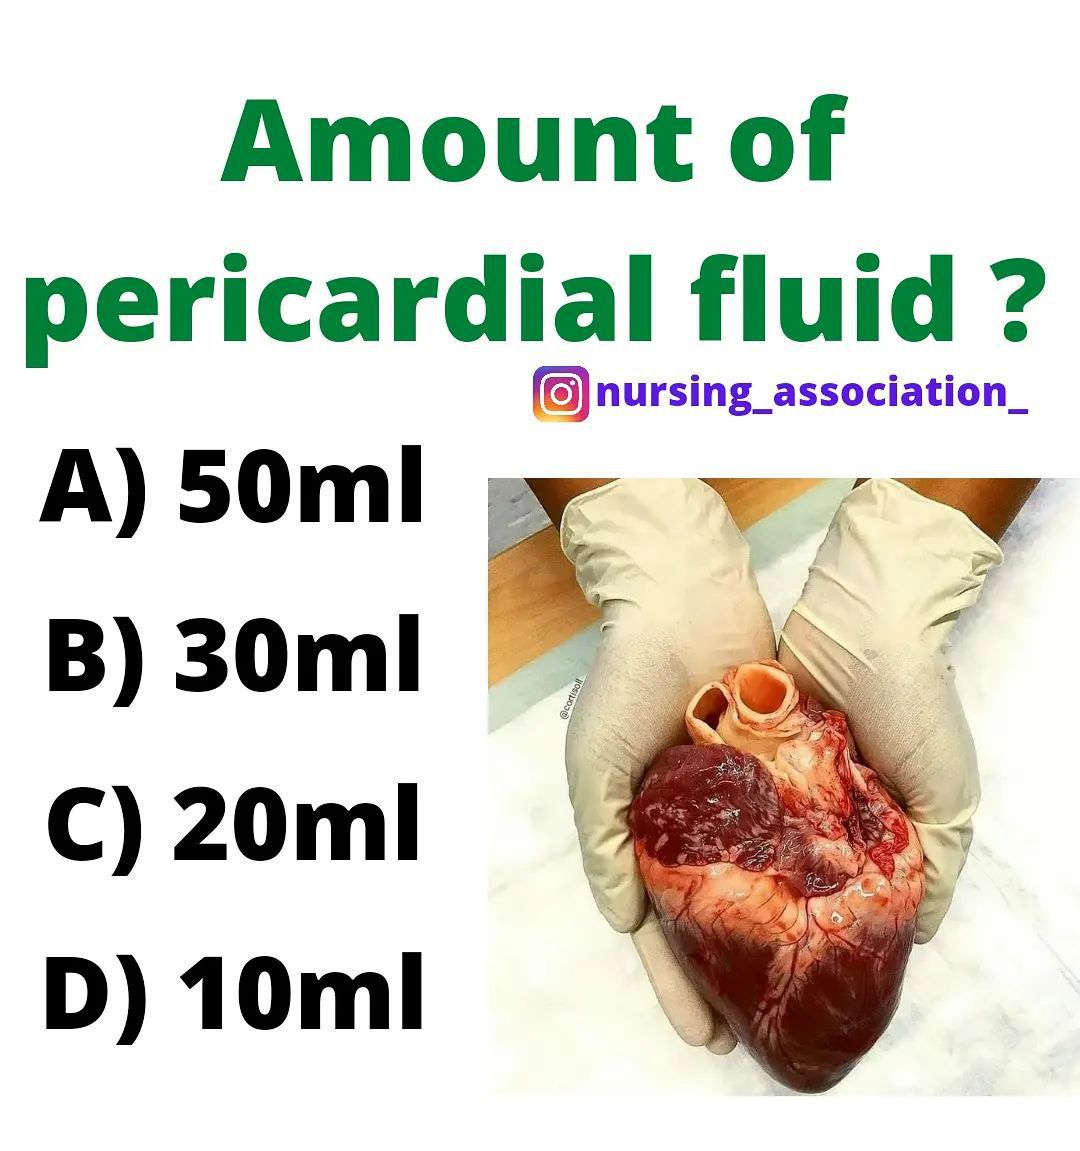 Amount of pericardial fluid